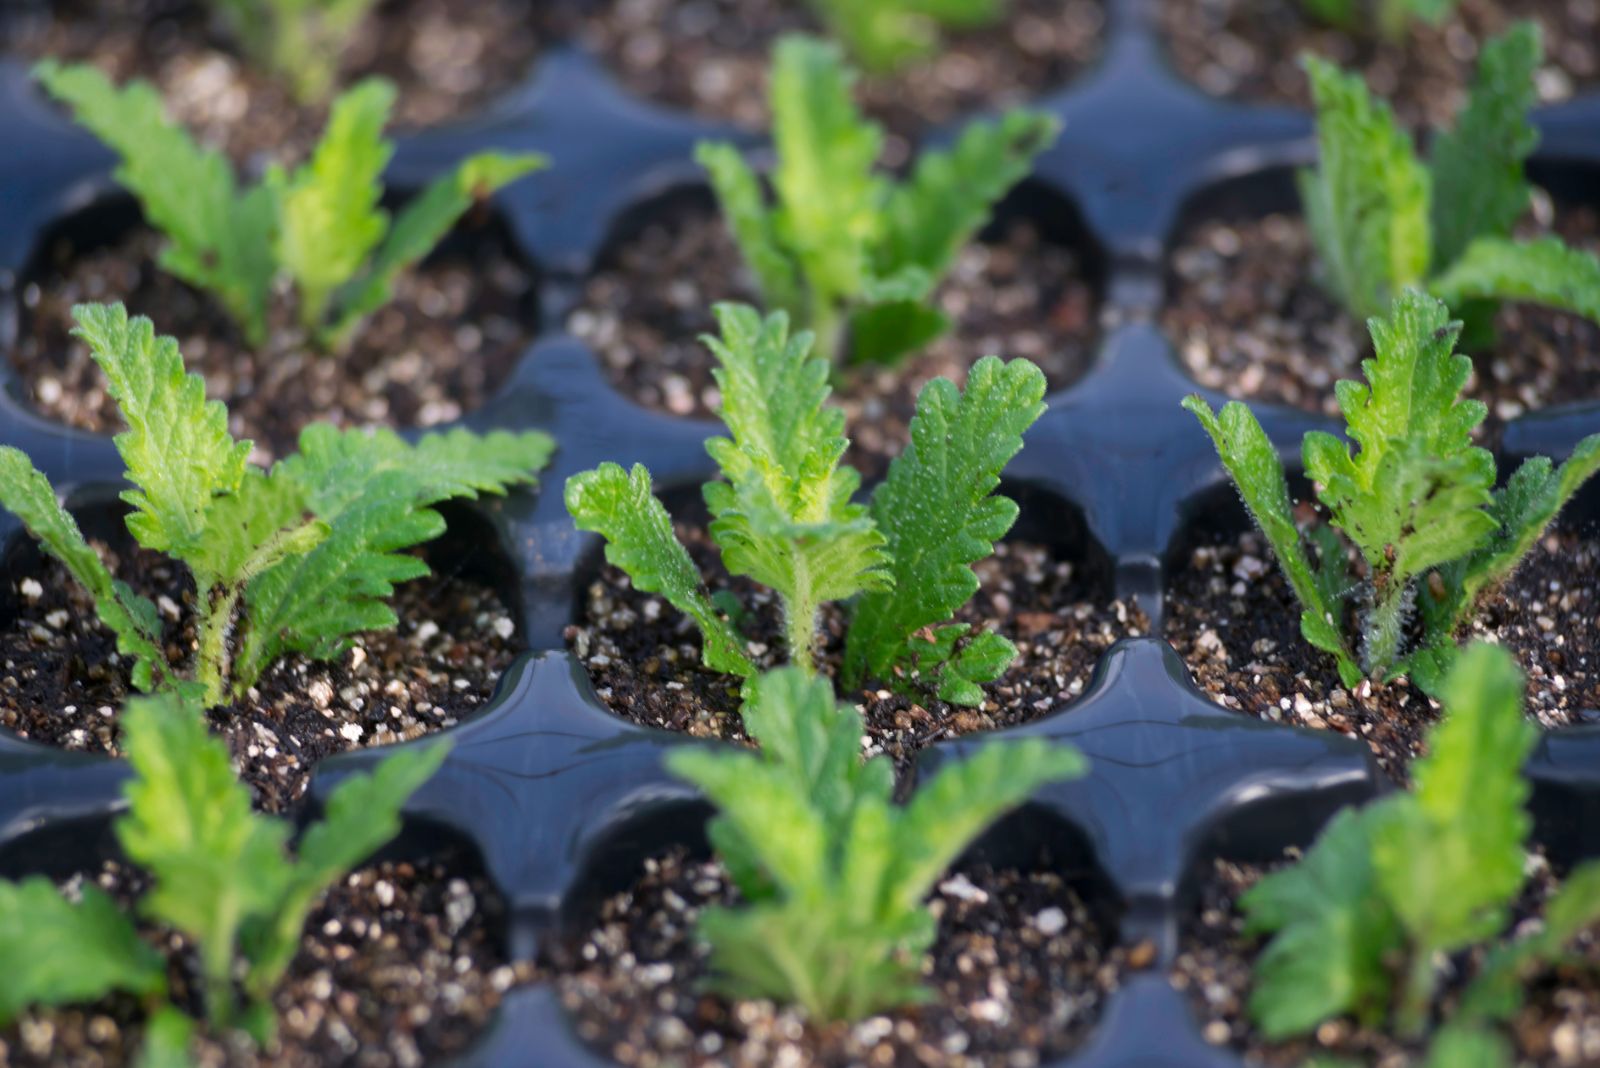 verbena plants transplanted in pots